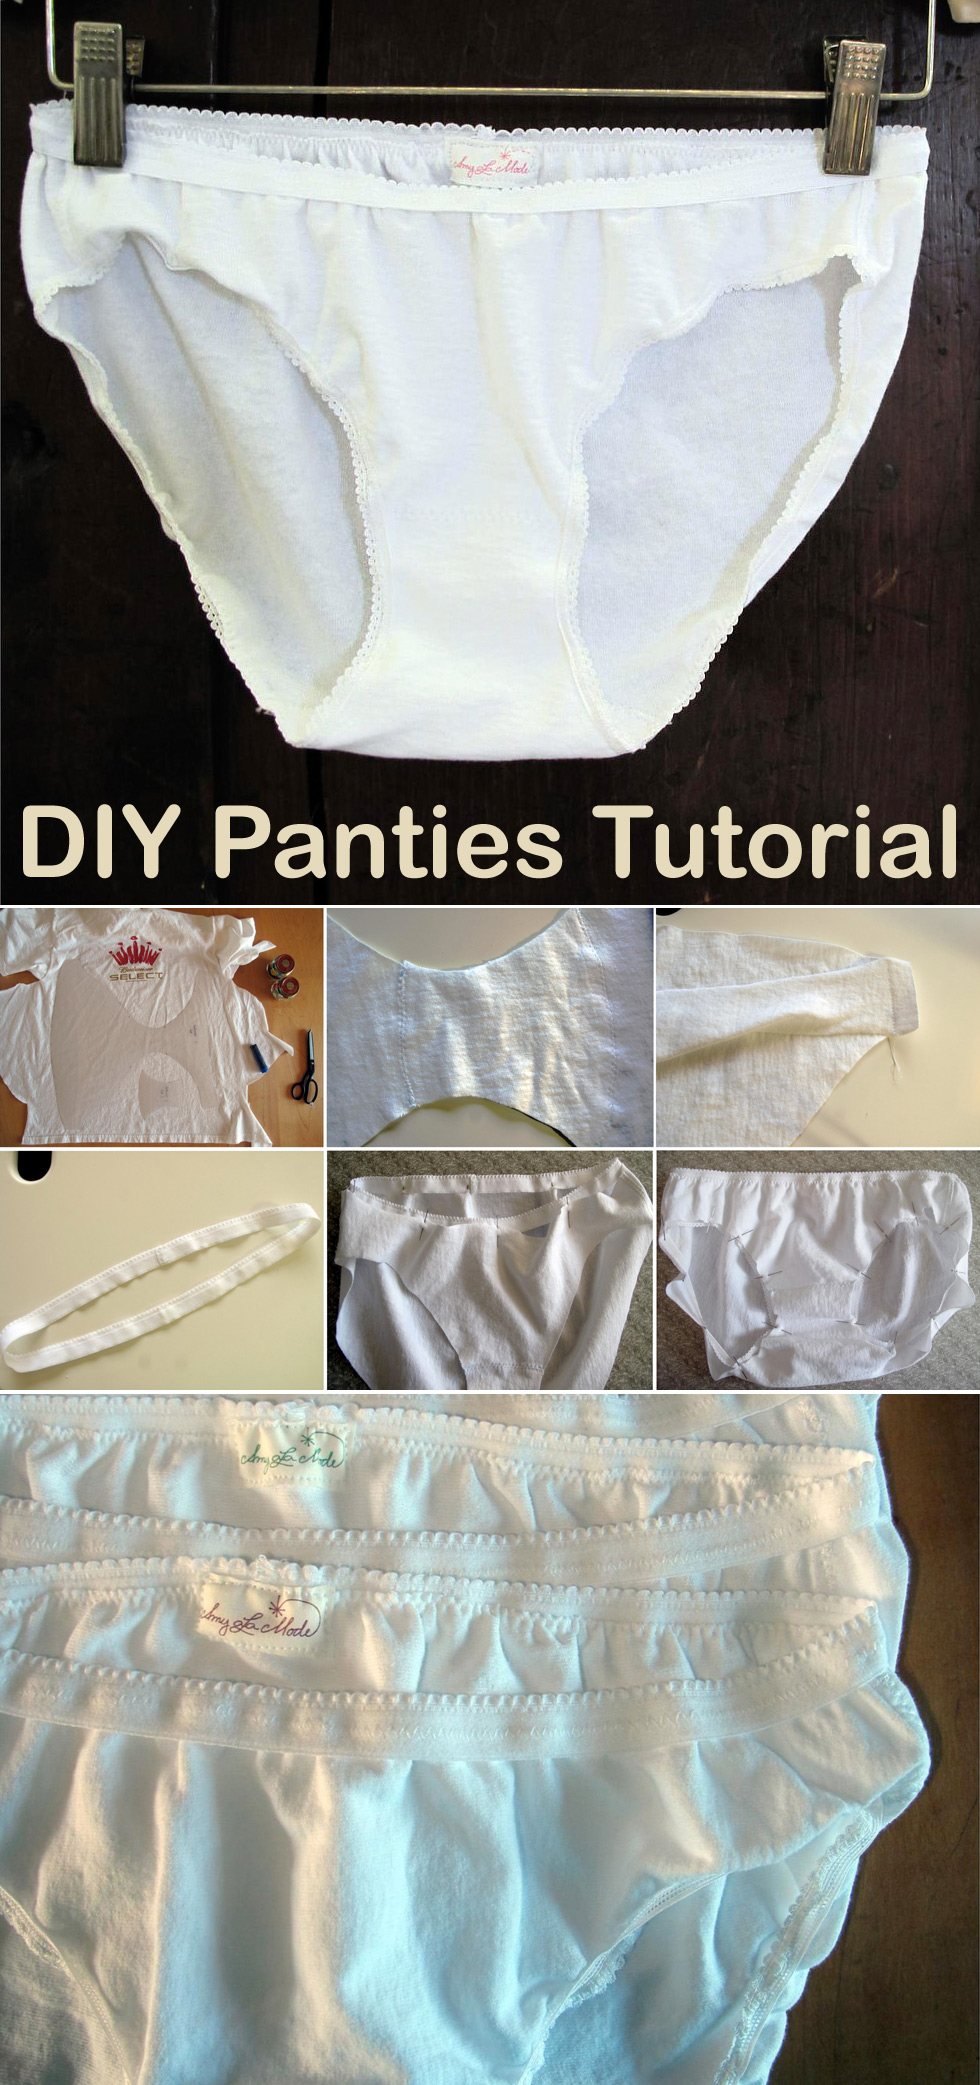 DIY Panties Tutorial